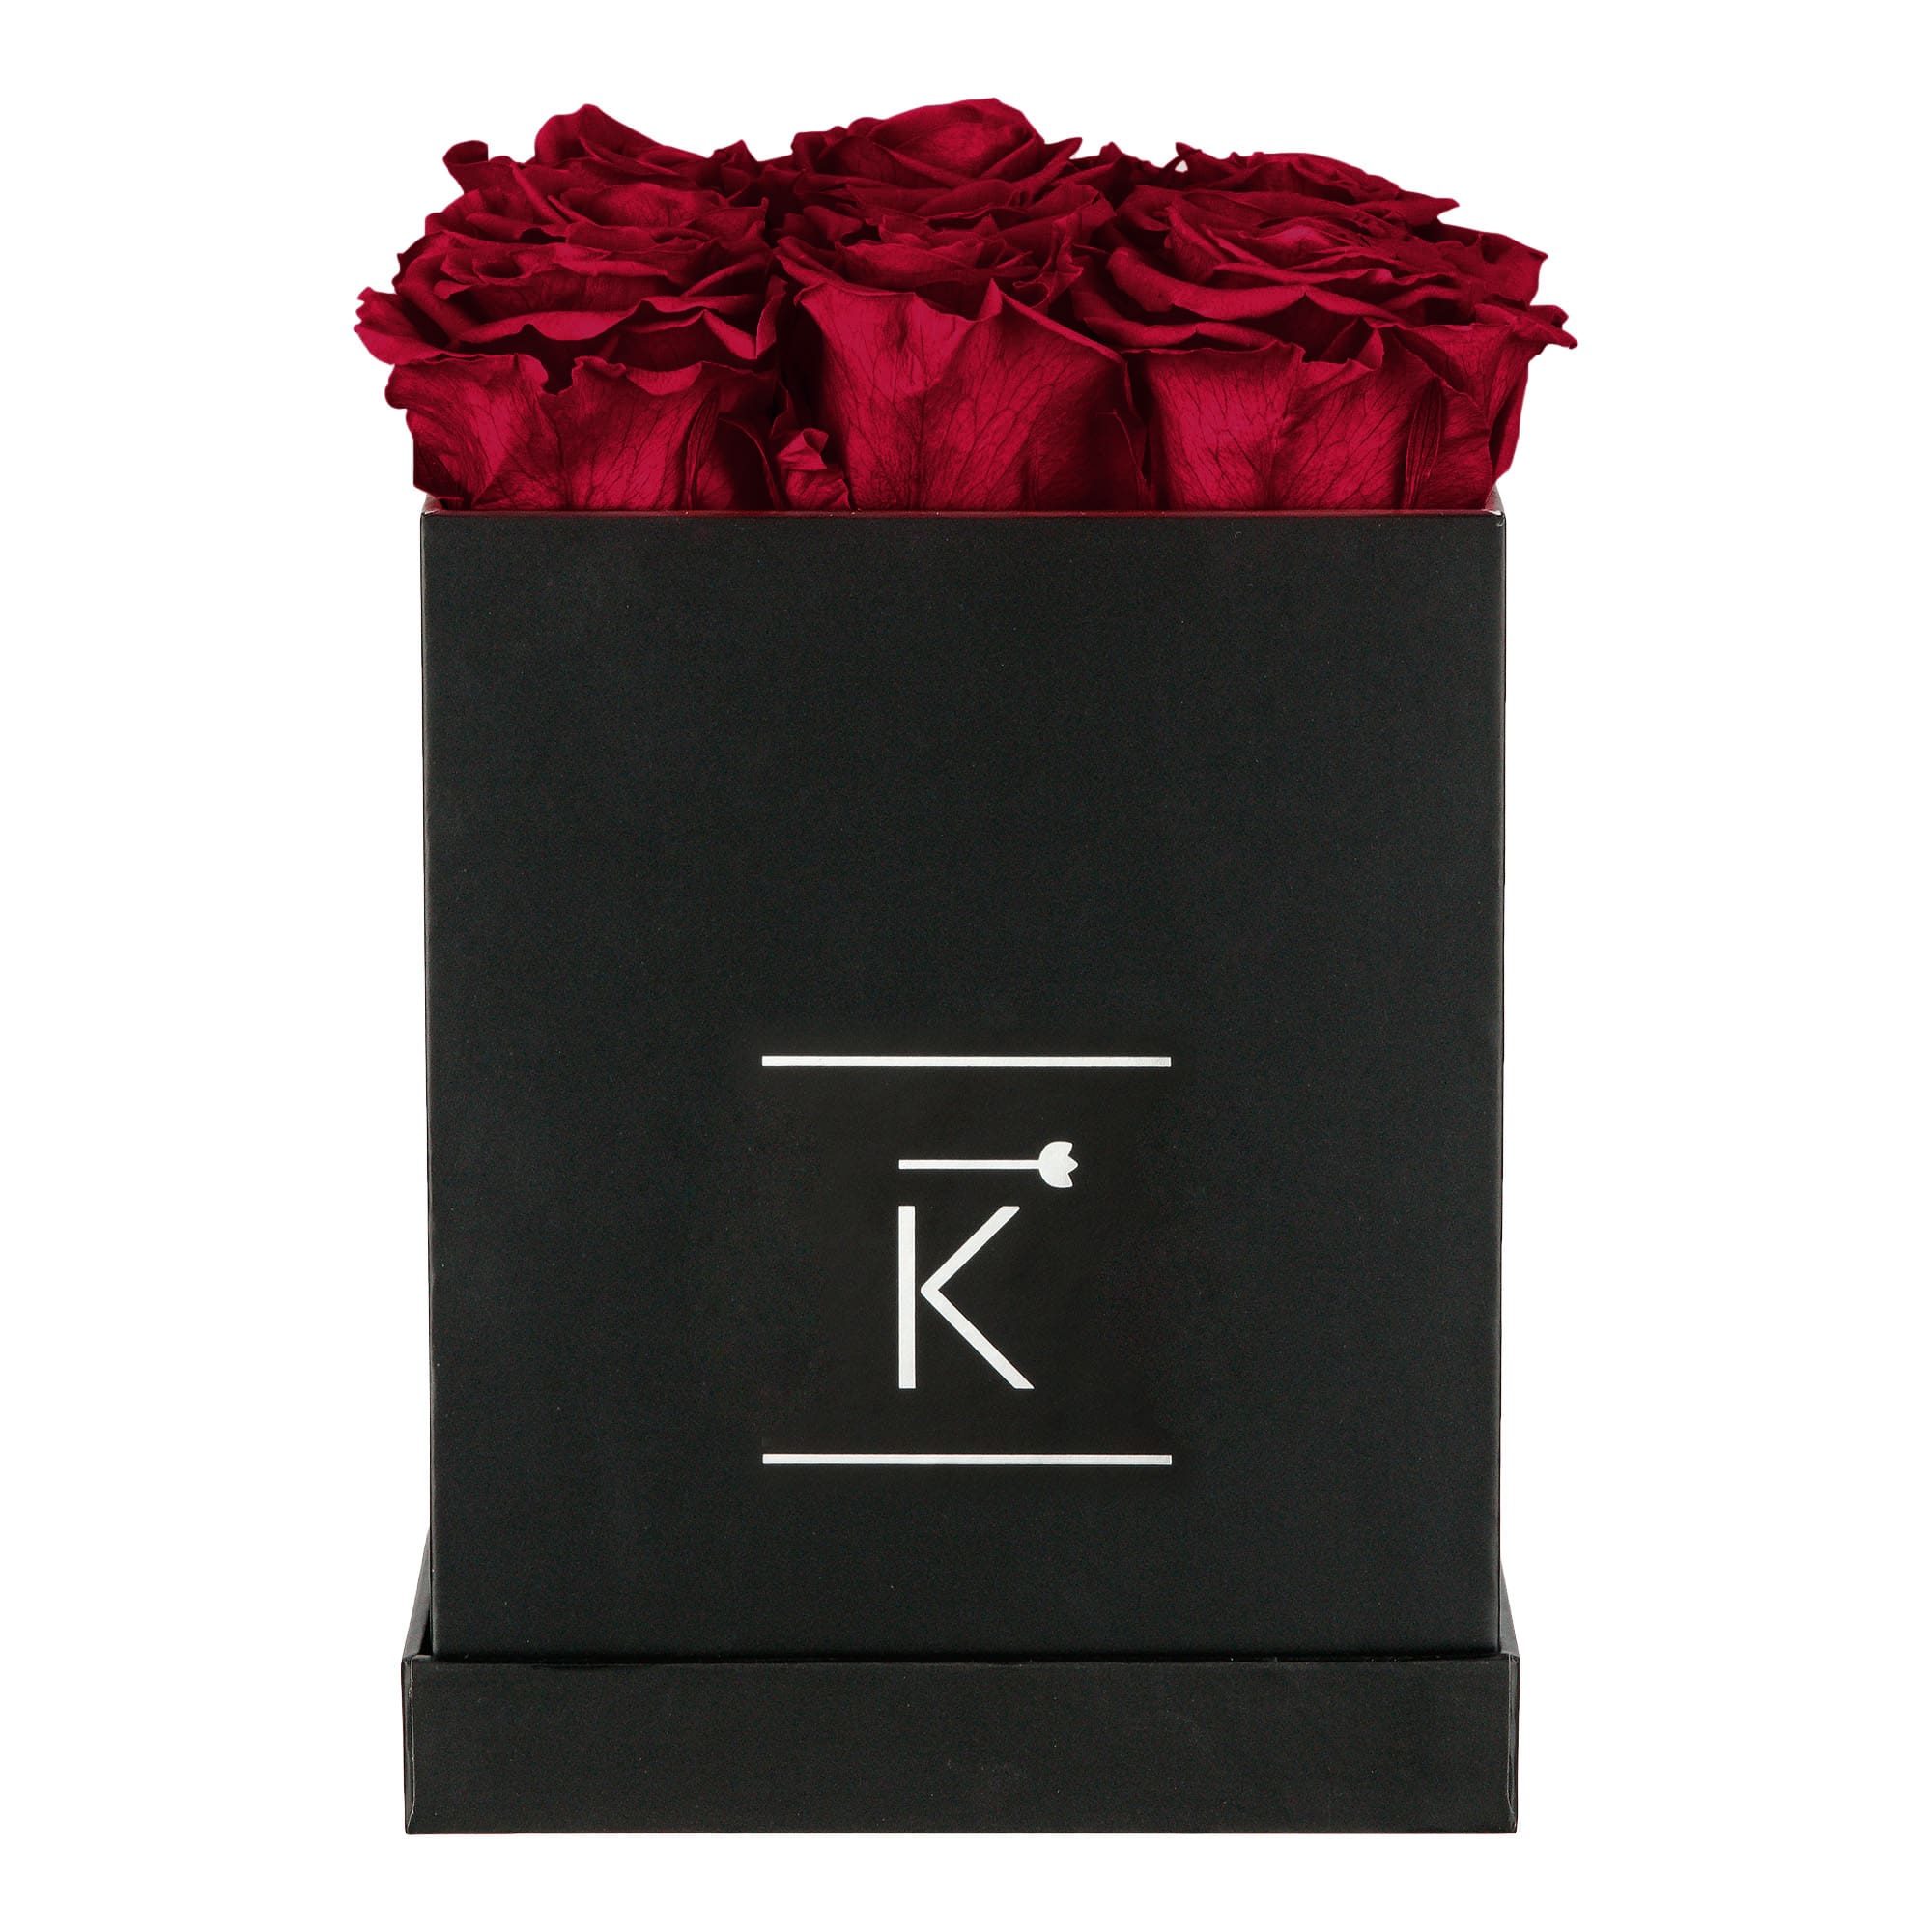 Infinity Rose Rosenbox Flowerbox Blumenbox echte Konservierte Rose Deko Geschenk 